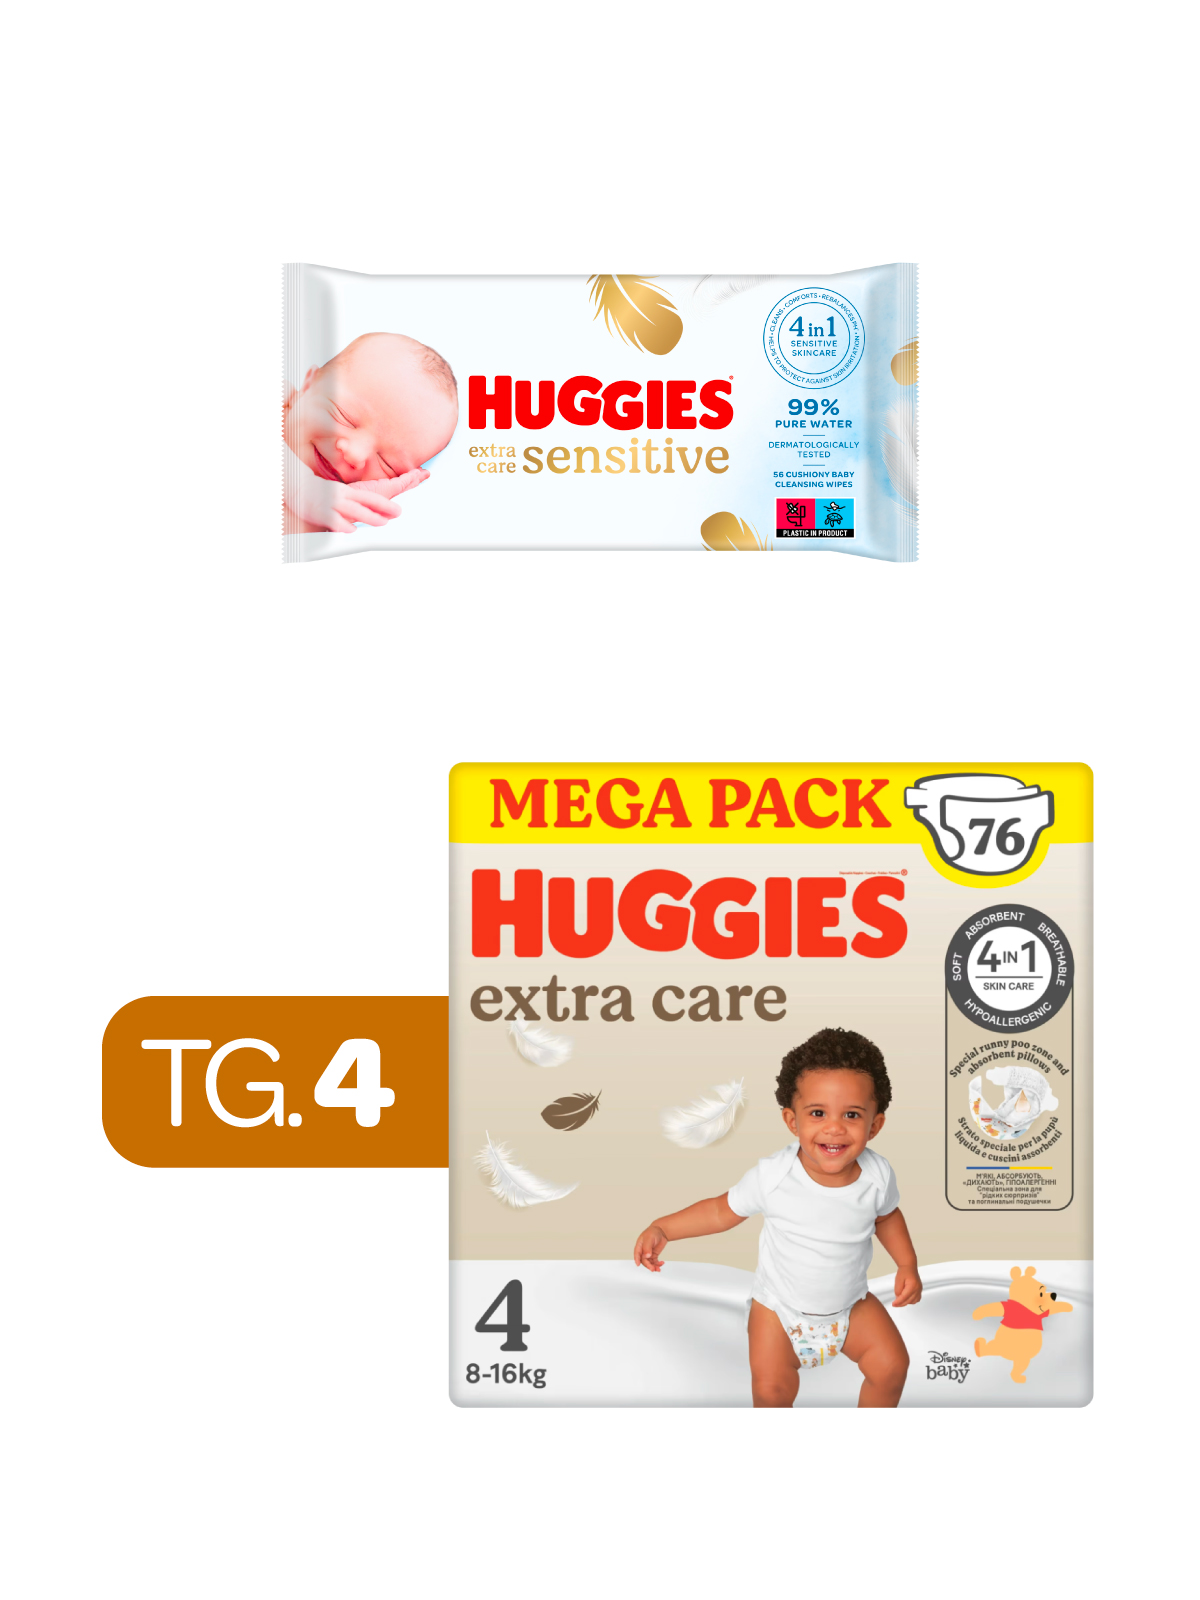 Huggies extra care mega pack tg.4 - 76 pezzi + huggies -extra care huggies salviette  56 - 